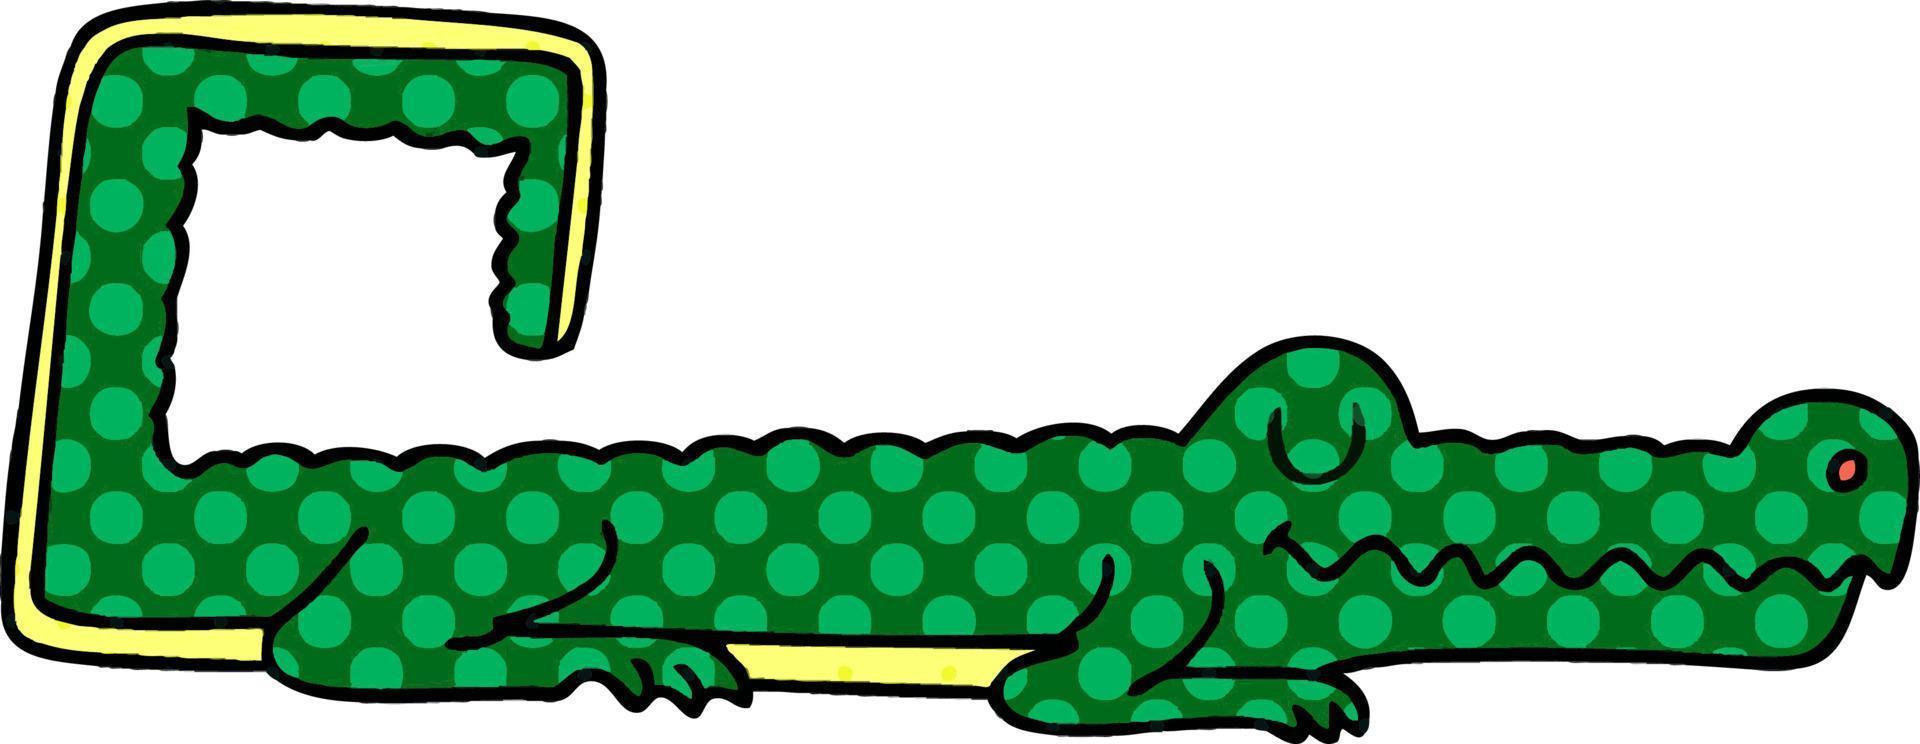 quirky comic book style cartoon crocodile vector